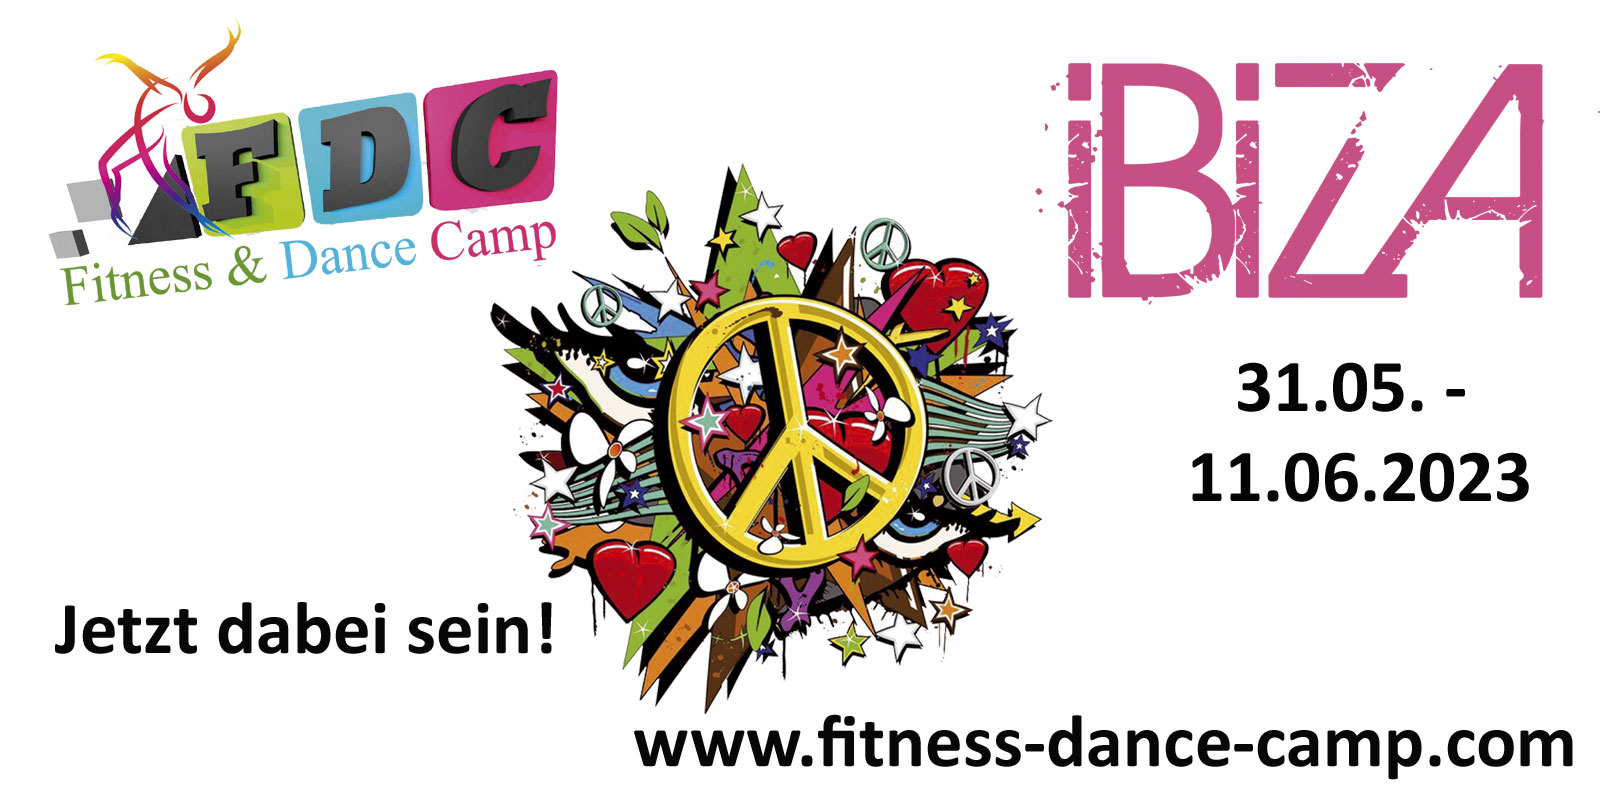 (c) Fitness-dance-camp.com